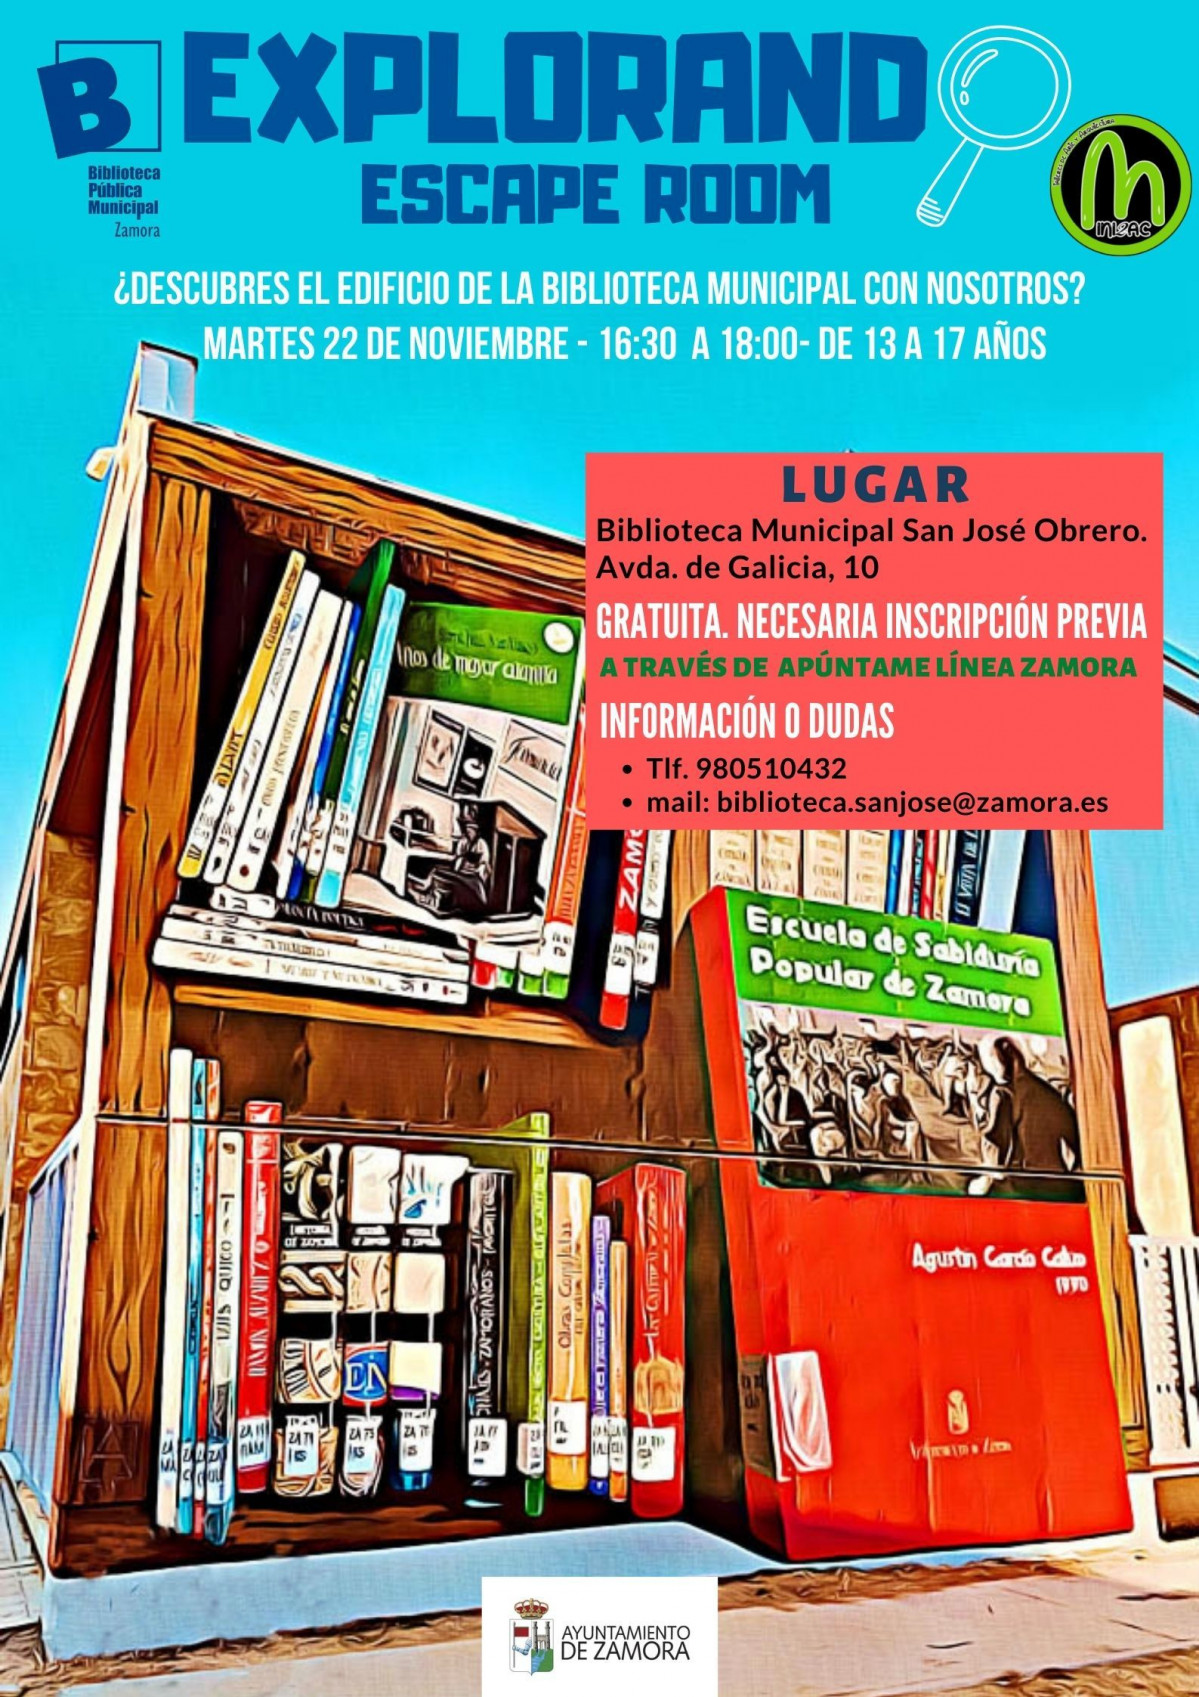 Escape Room Biblioteca